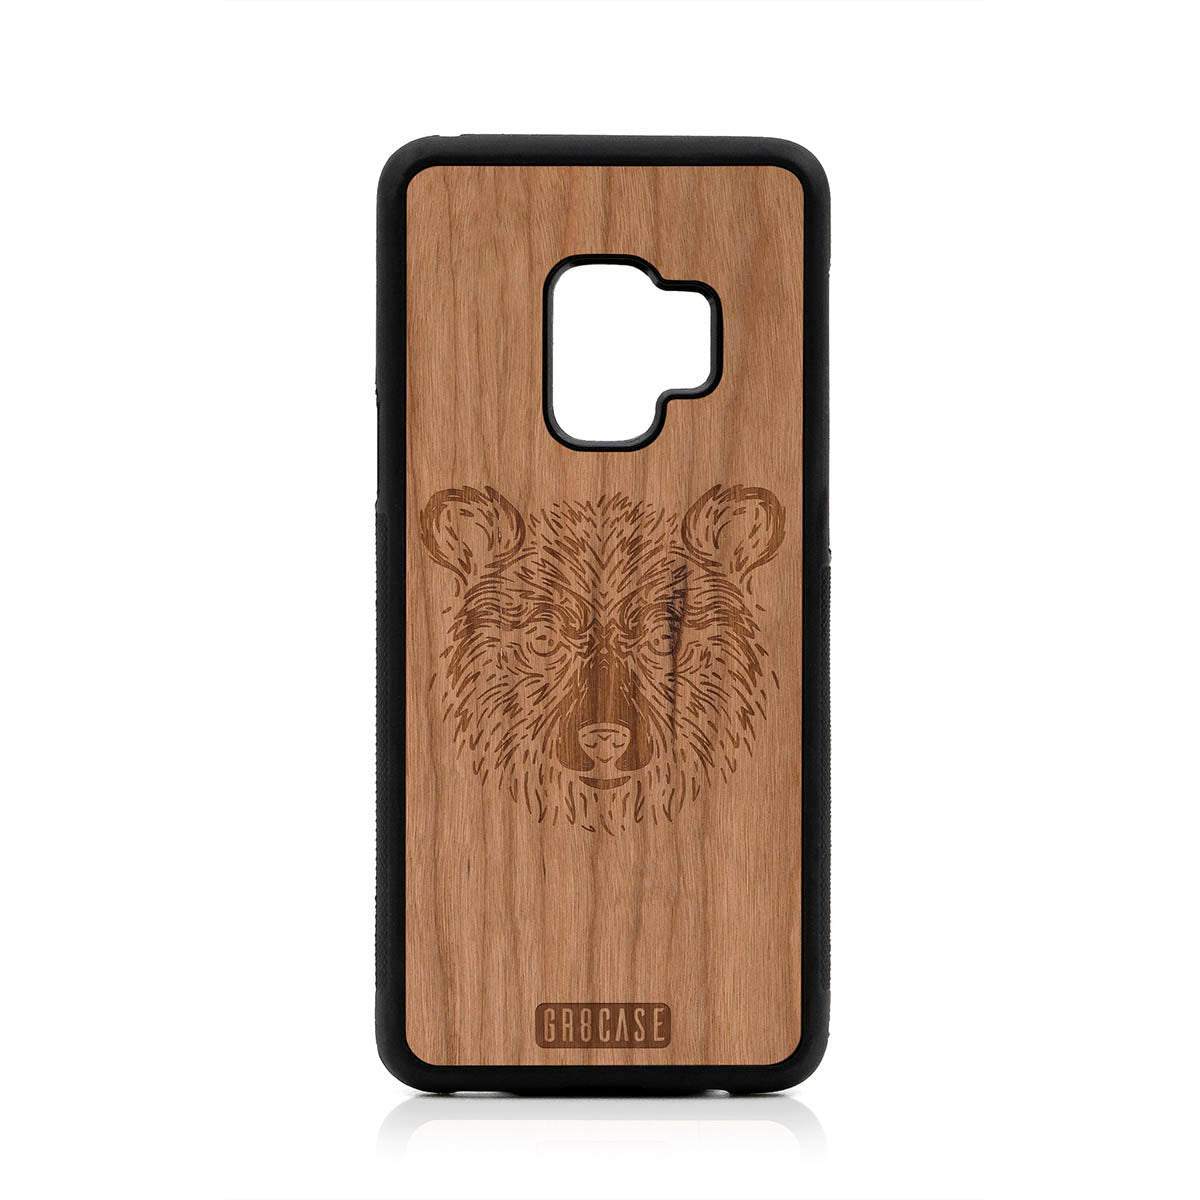 Furry Bear Design Wood Case For Samsung Galaxy S9